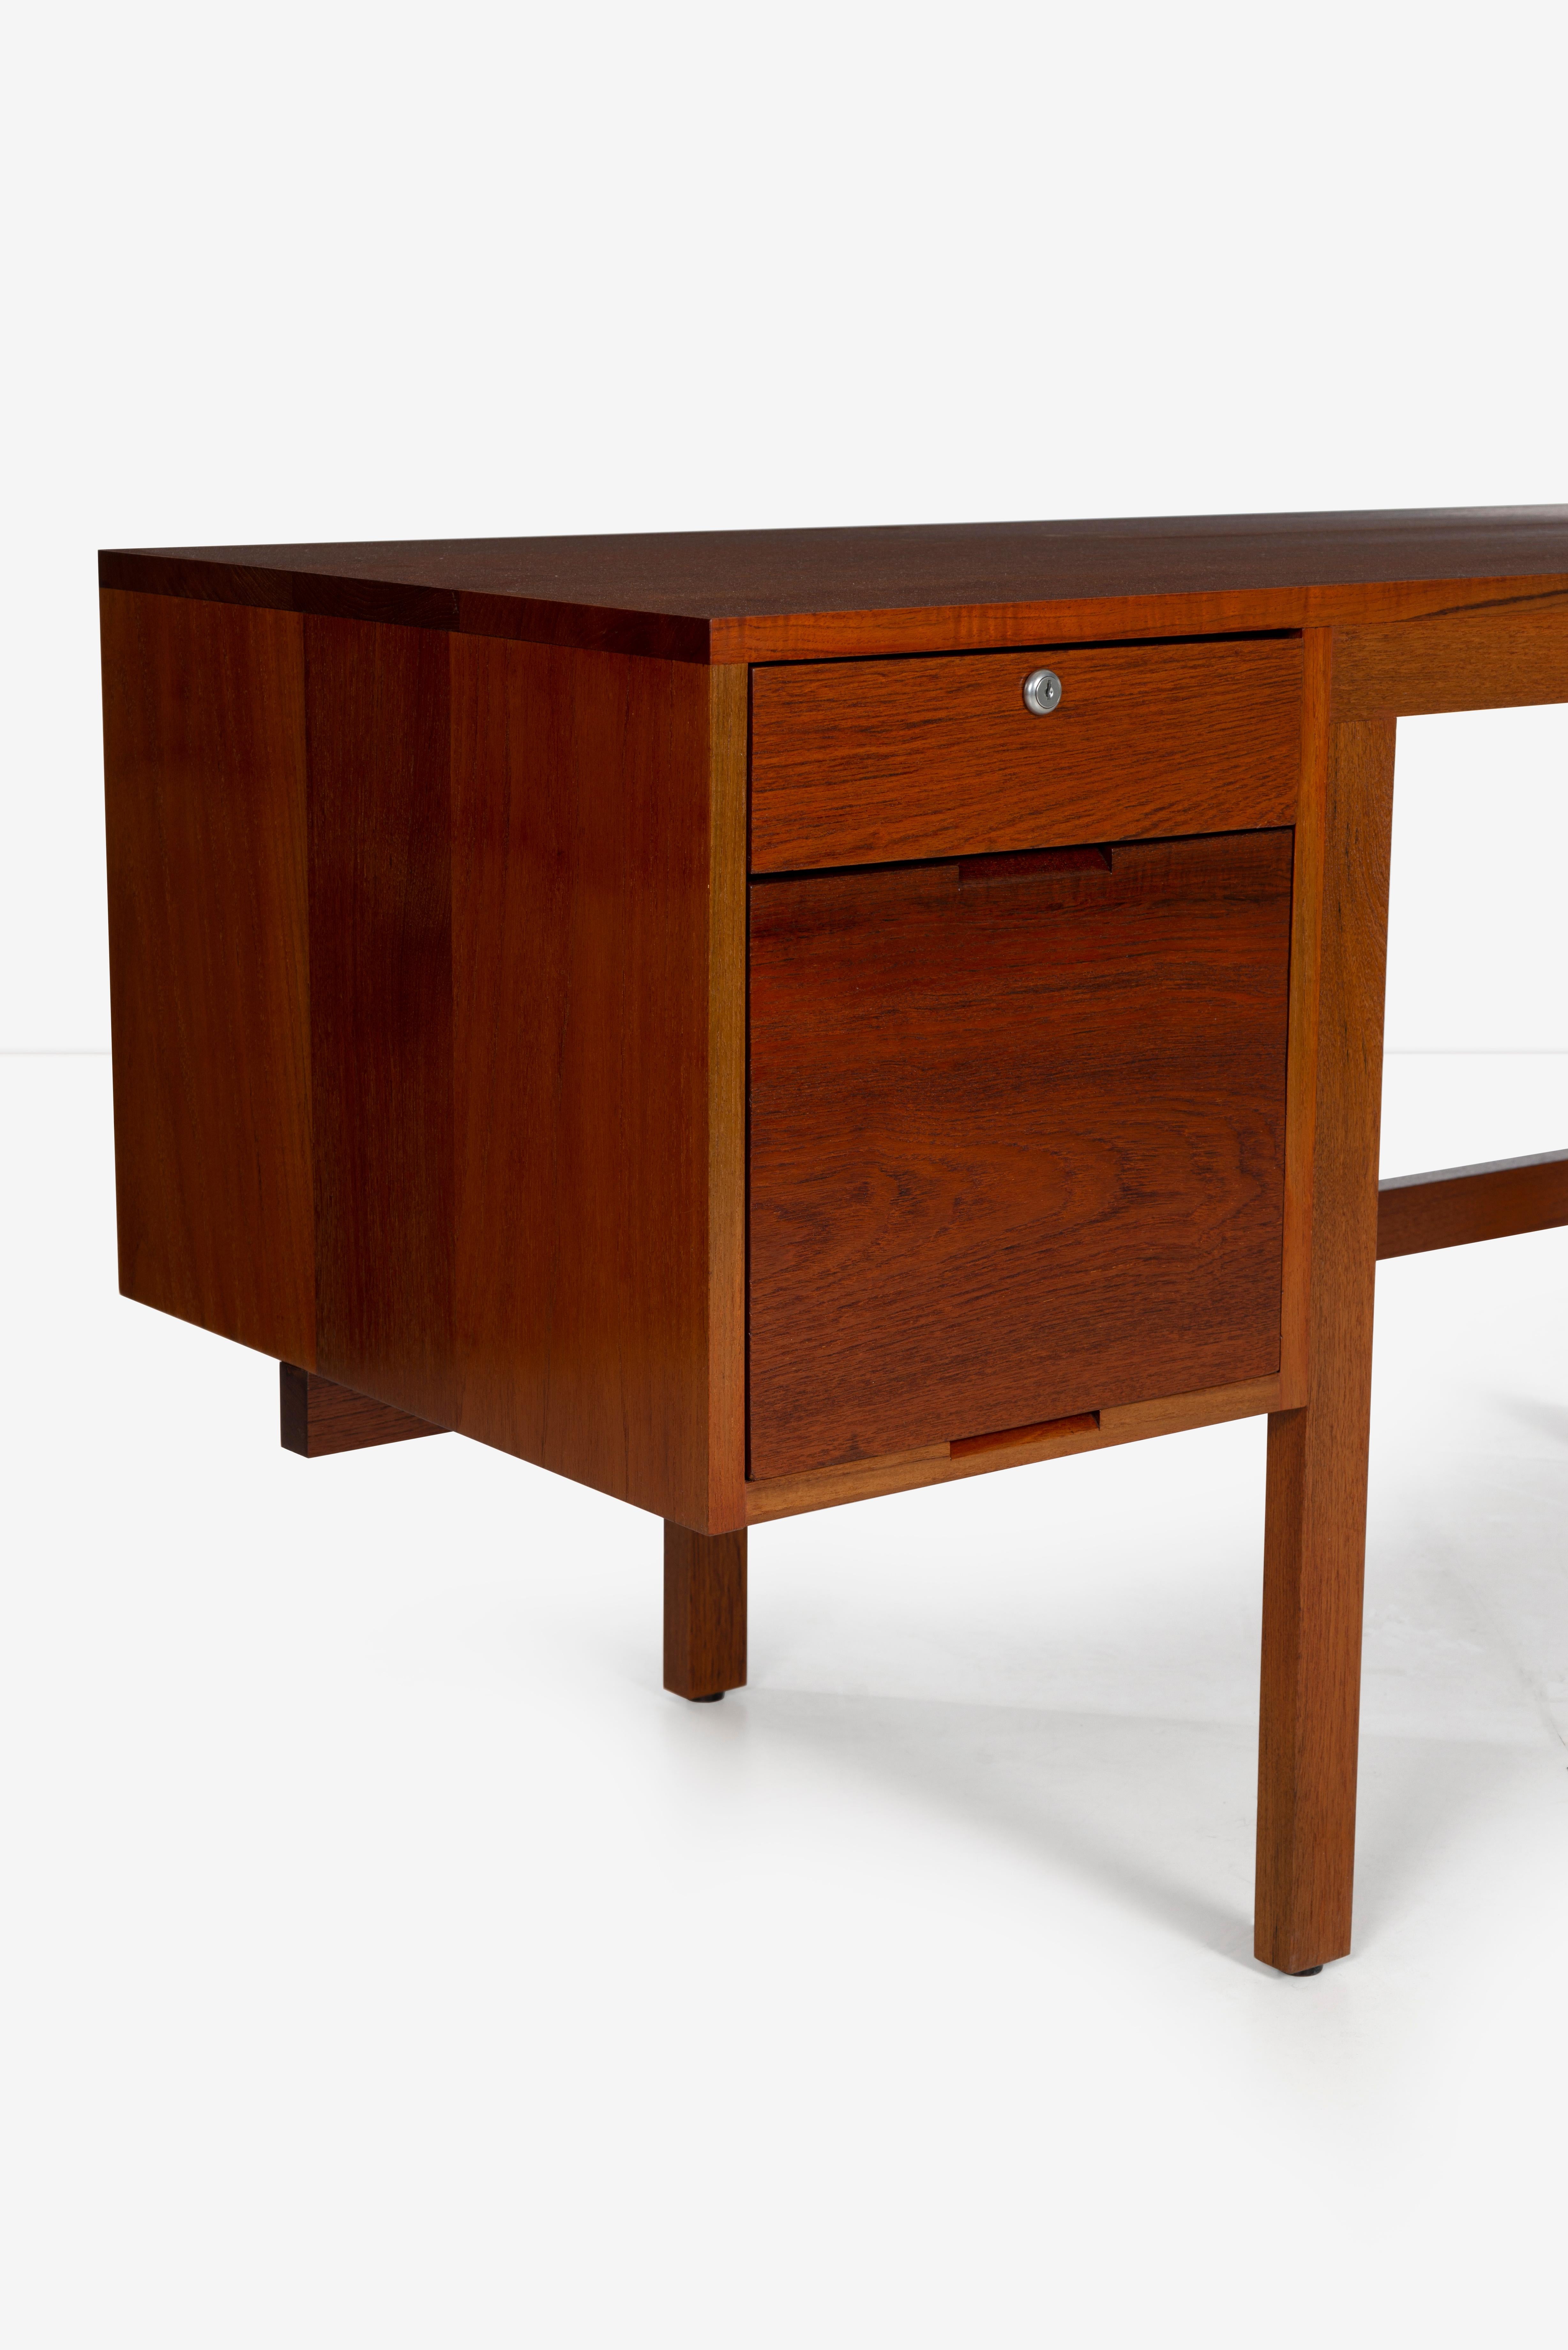 Marcel Breuer Custom Desk In Good Condition For Sale In Chicago, IL